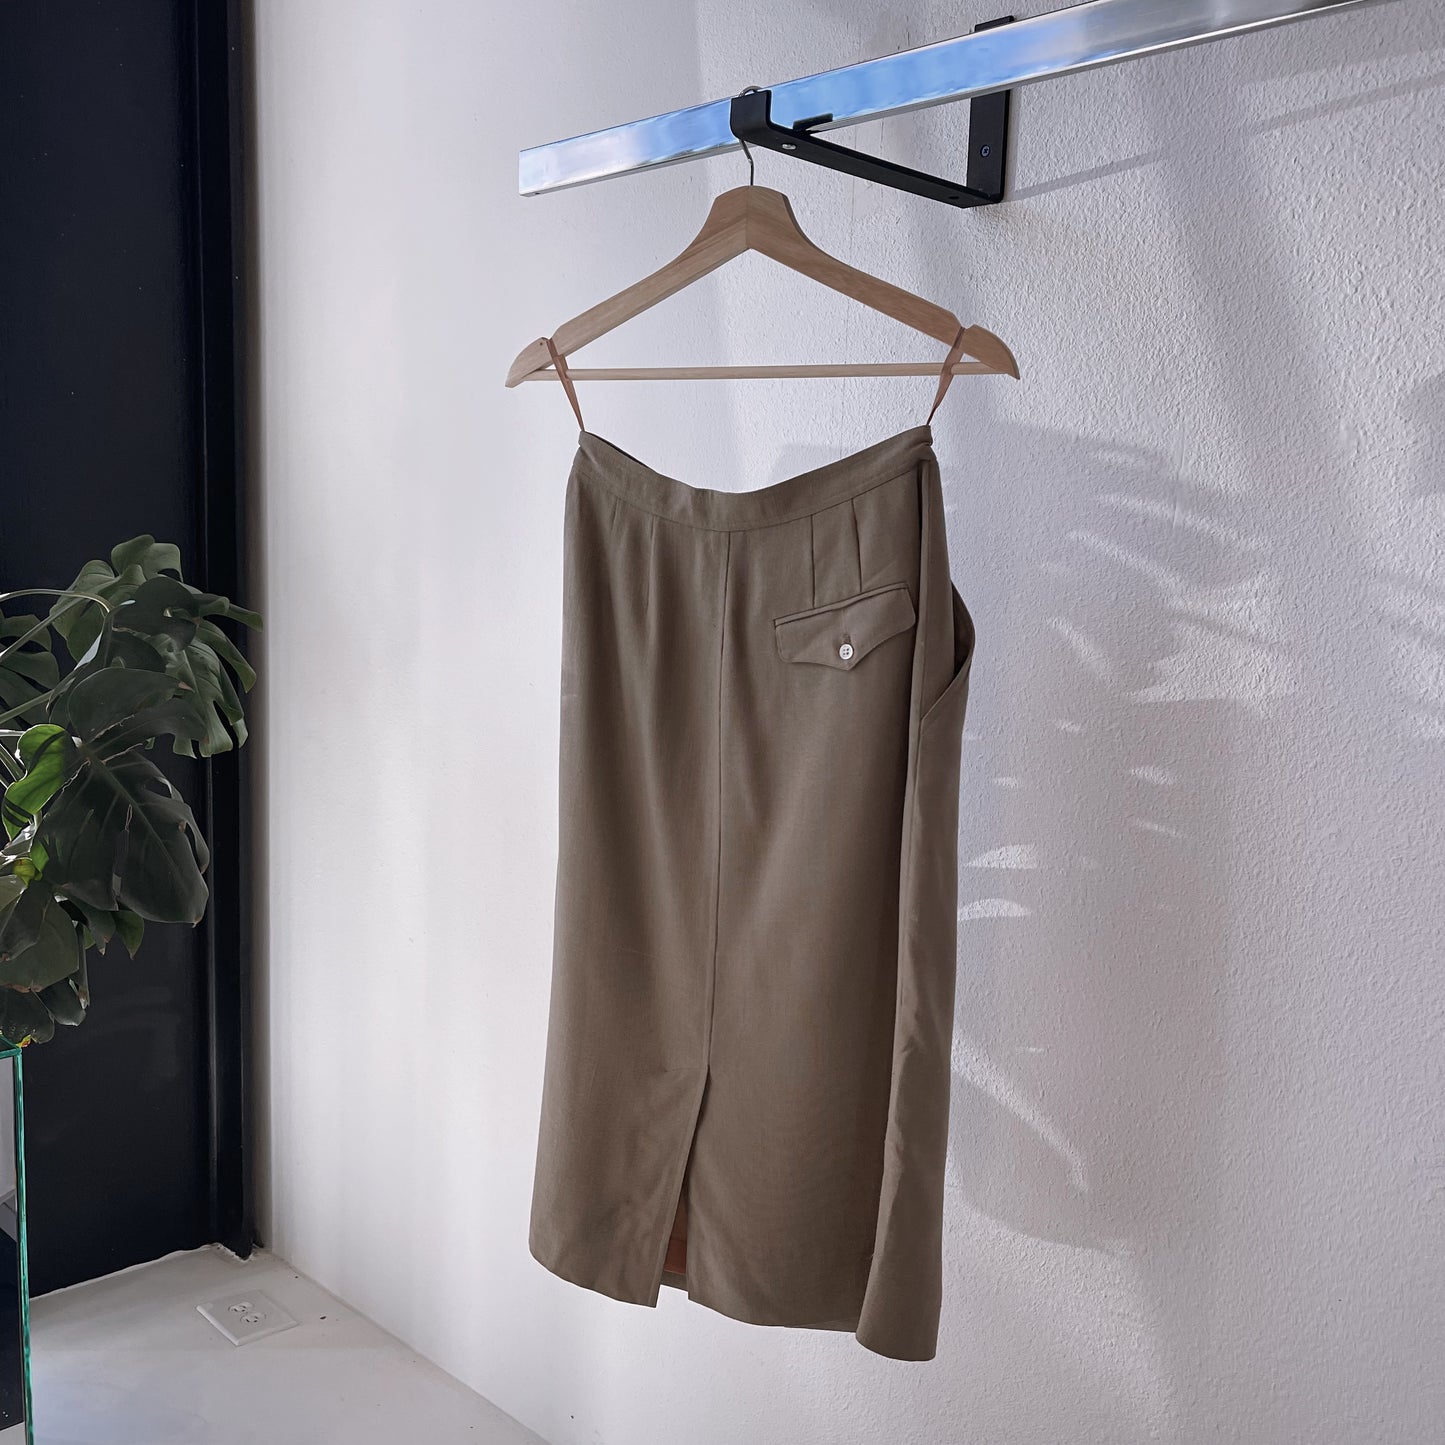 Vintage 80’s Liz Claiborne Skirt in Tan